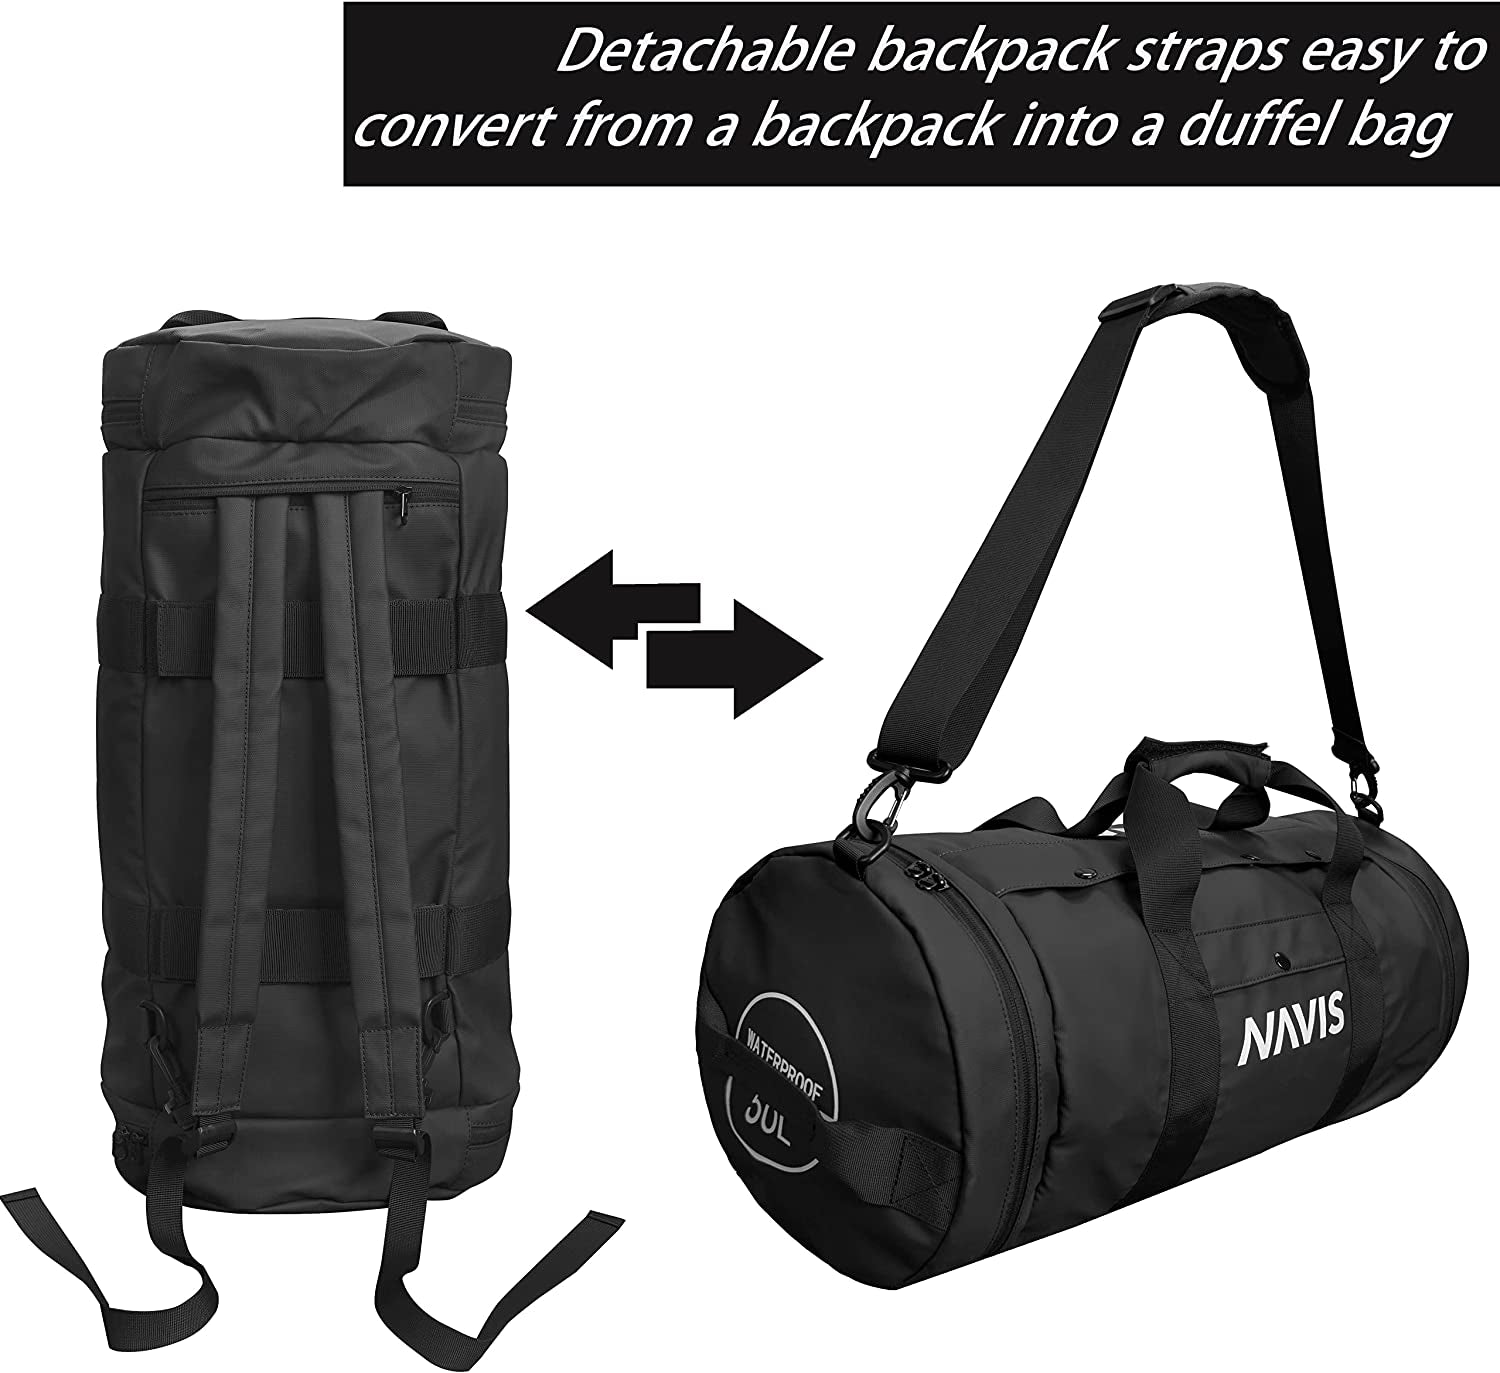 Navis Marine Sailing Bag Waterproof Duffel Backpack Multifunction Use for Boating Fishing Watersports (Black 50L)